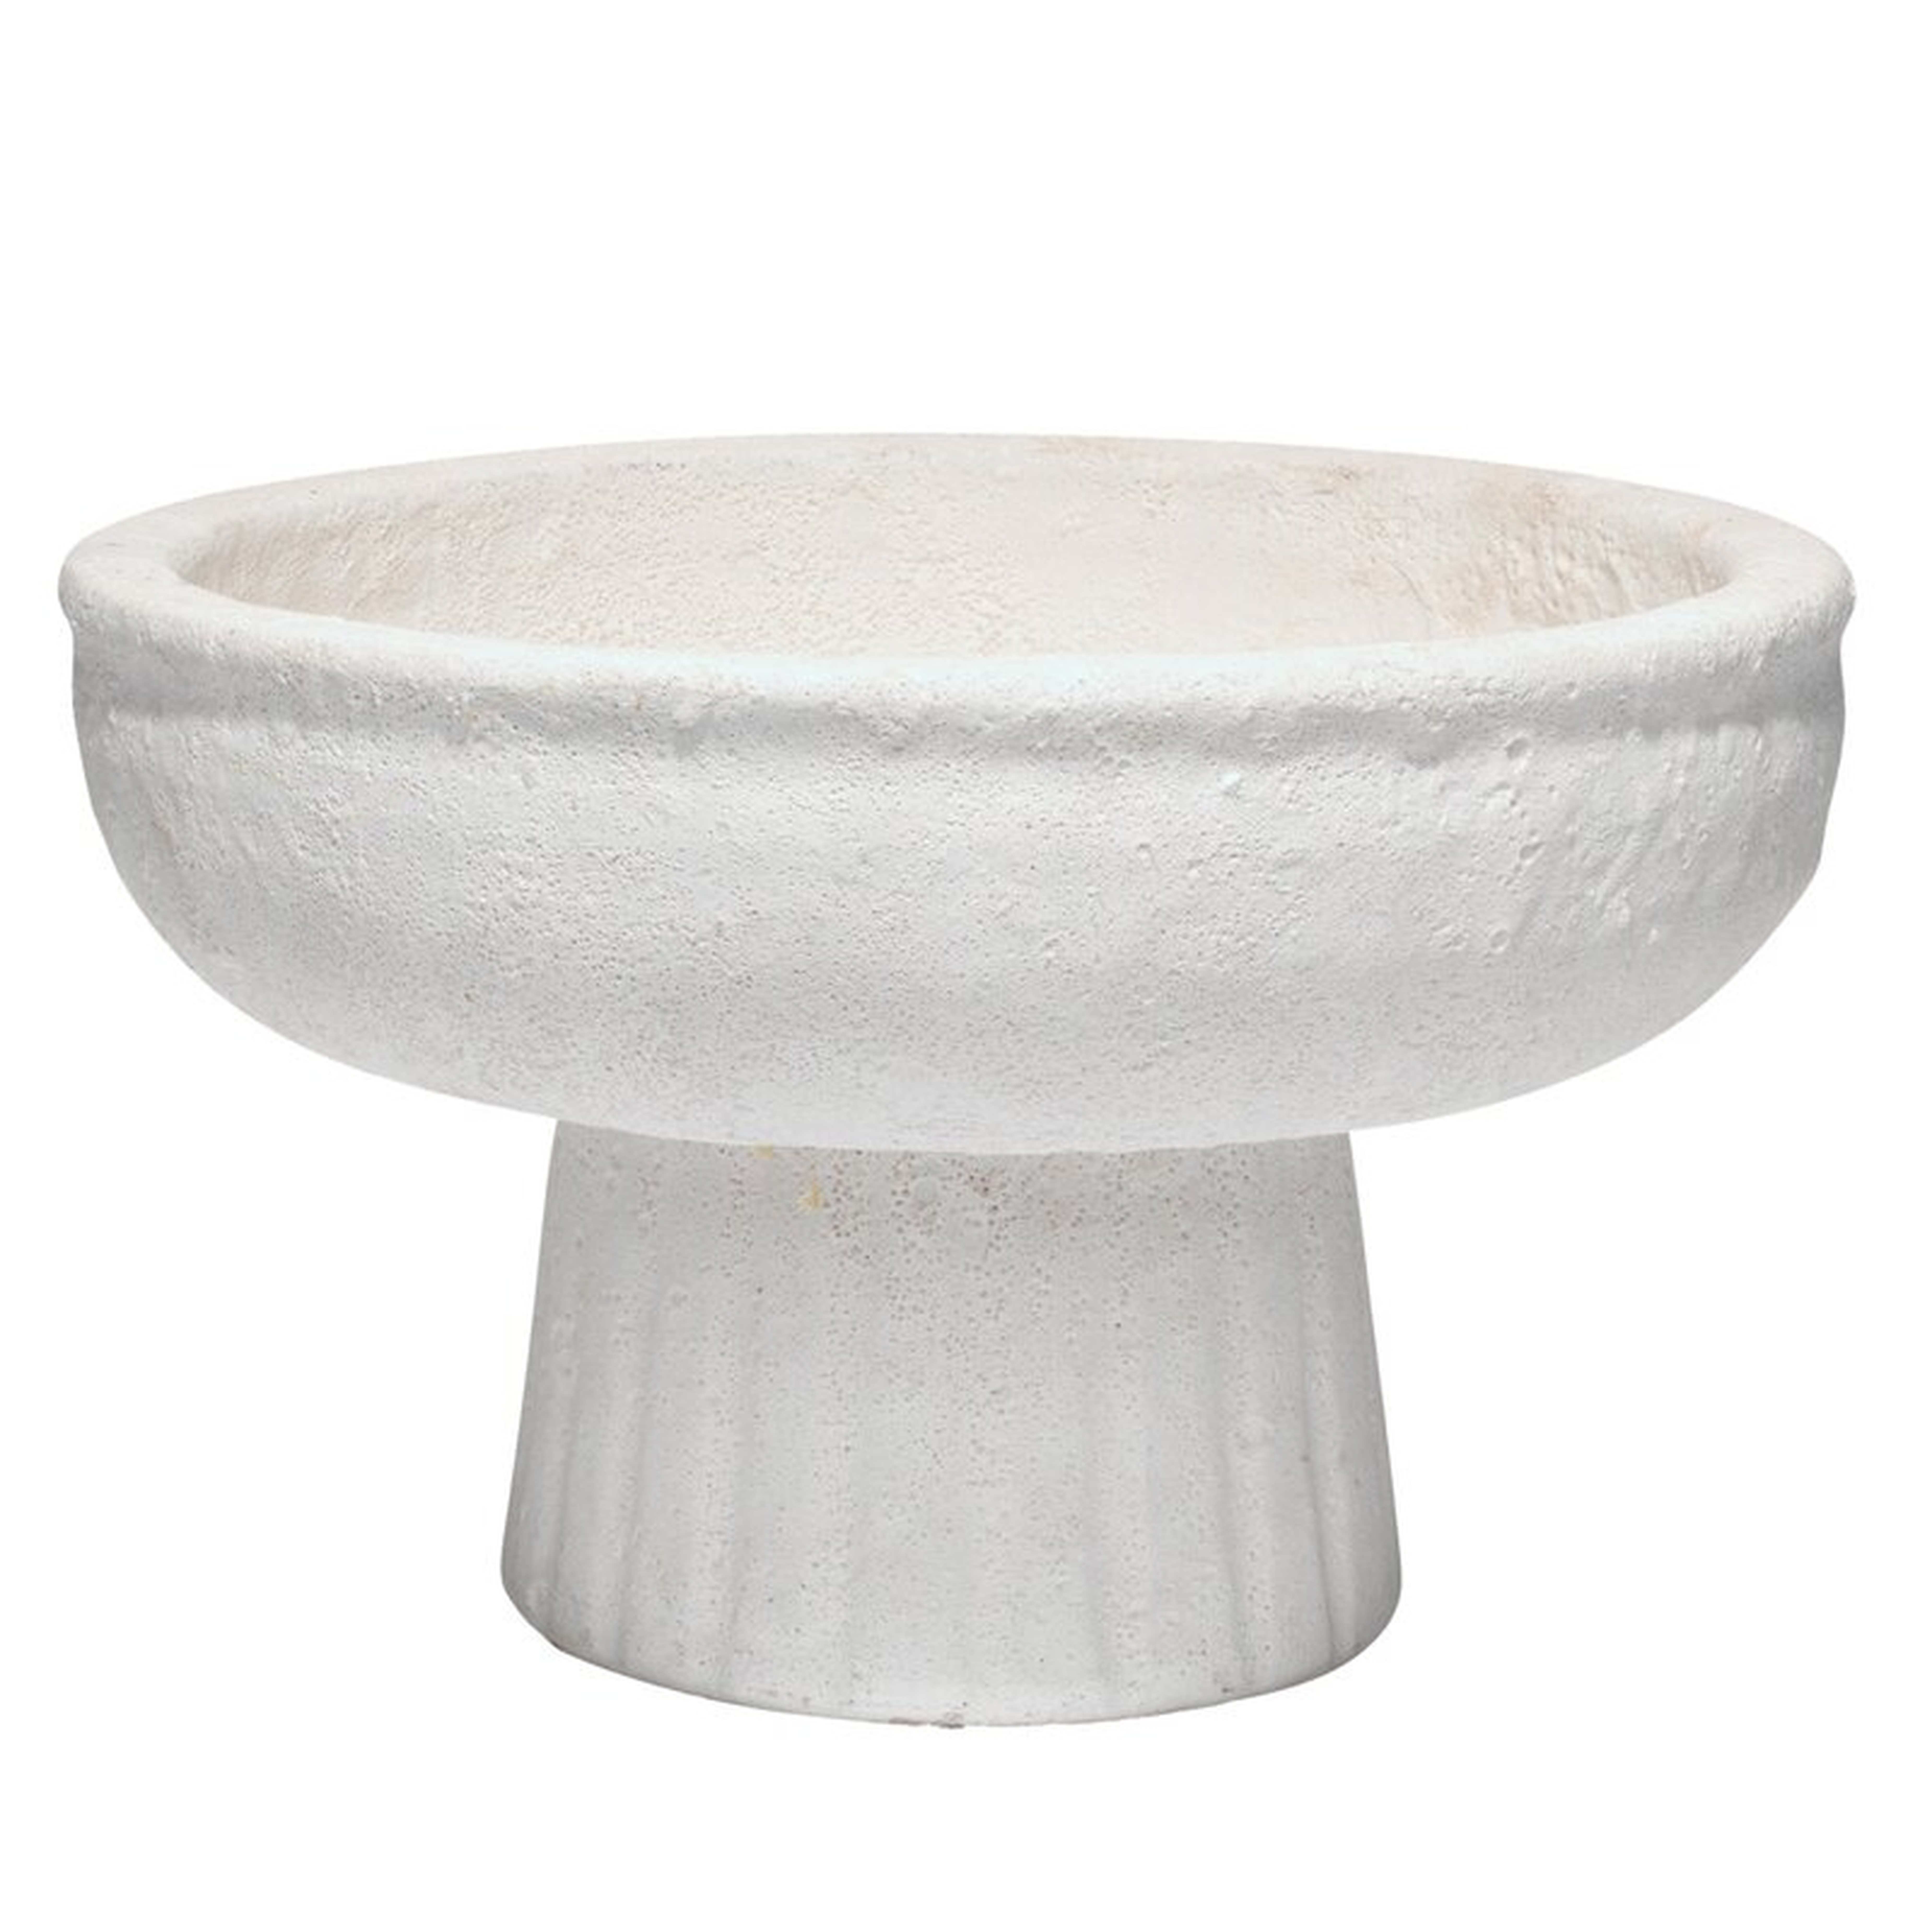 Jamie Young Company Aegean Large Pedestal Bowl in Rough Matte White Ceramic in , 6.5"" H x 10.5"" W x 10.5"" D - Perigold